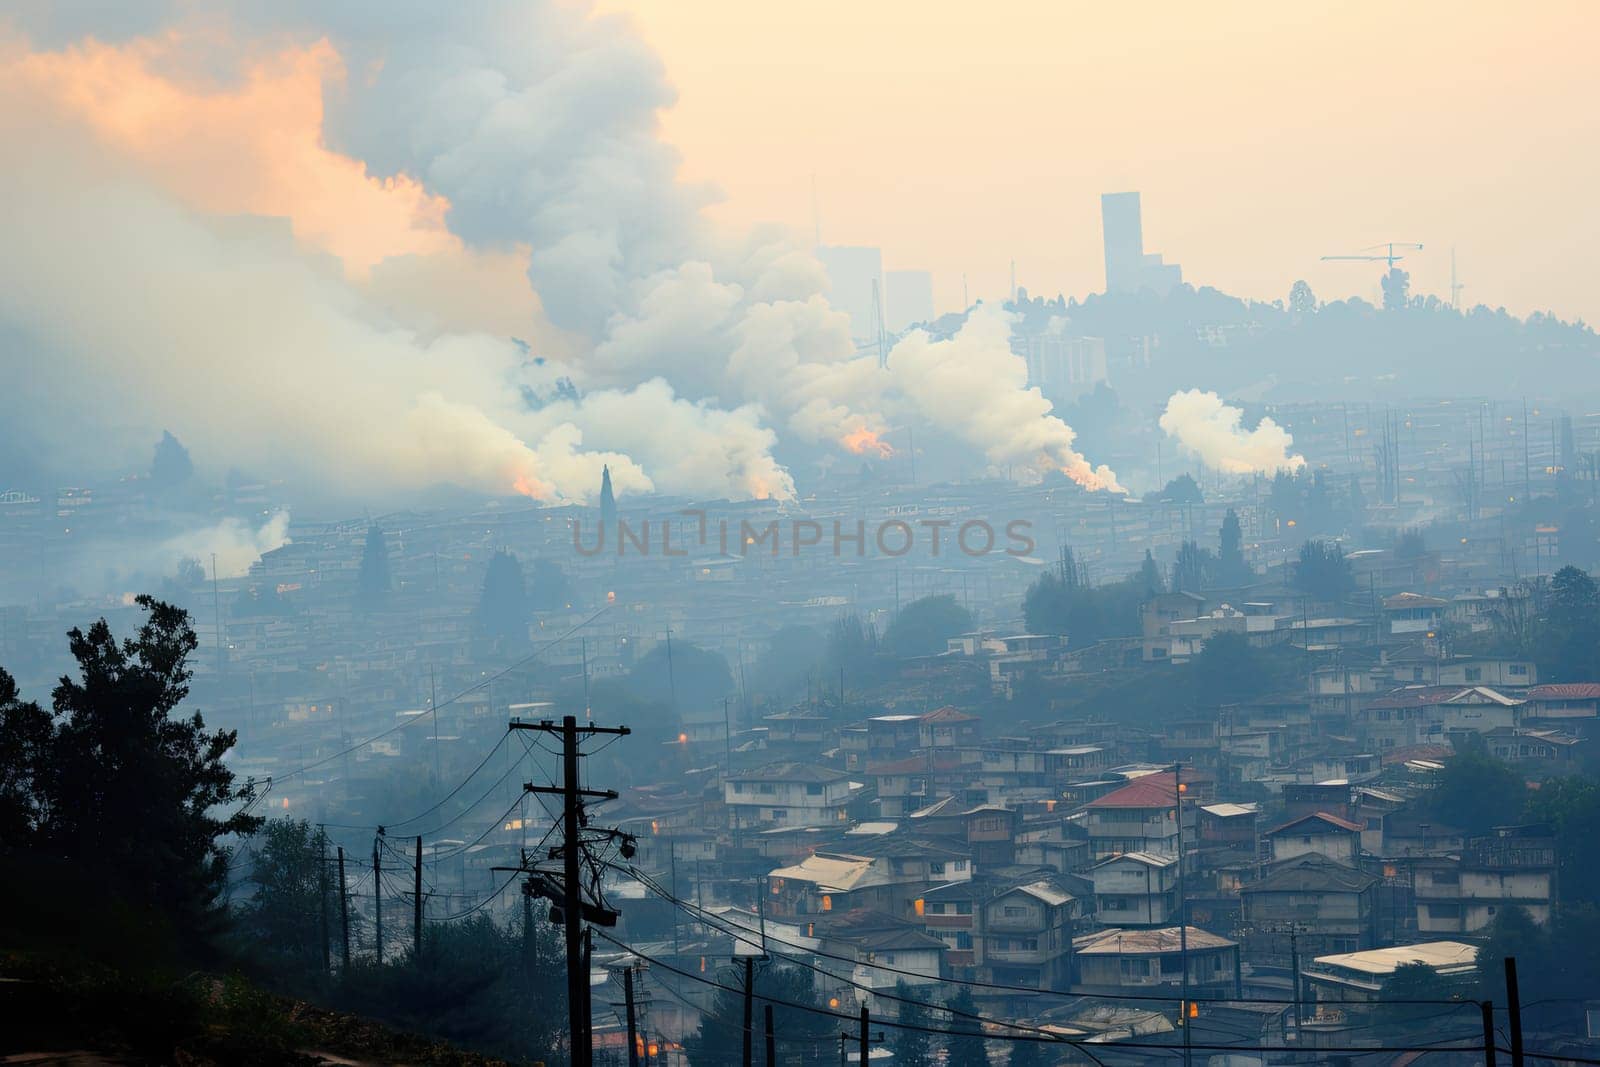 a city shrouded in smoke and smokestacks by golibtolibov